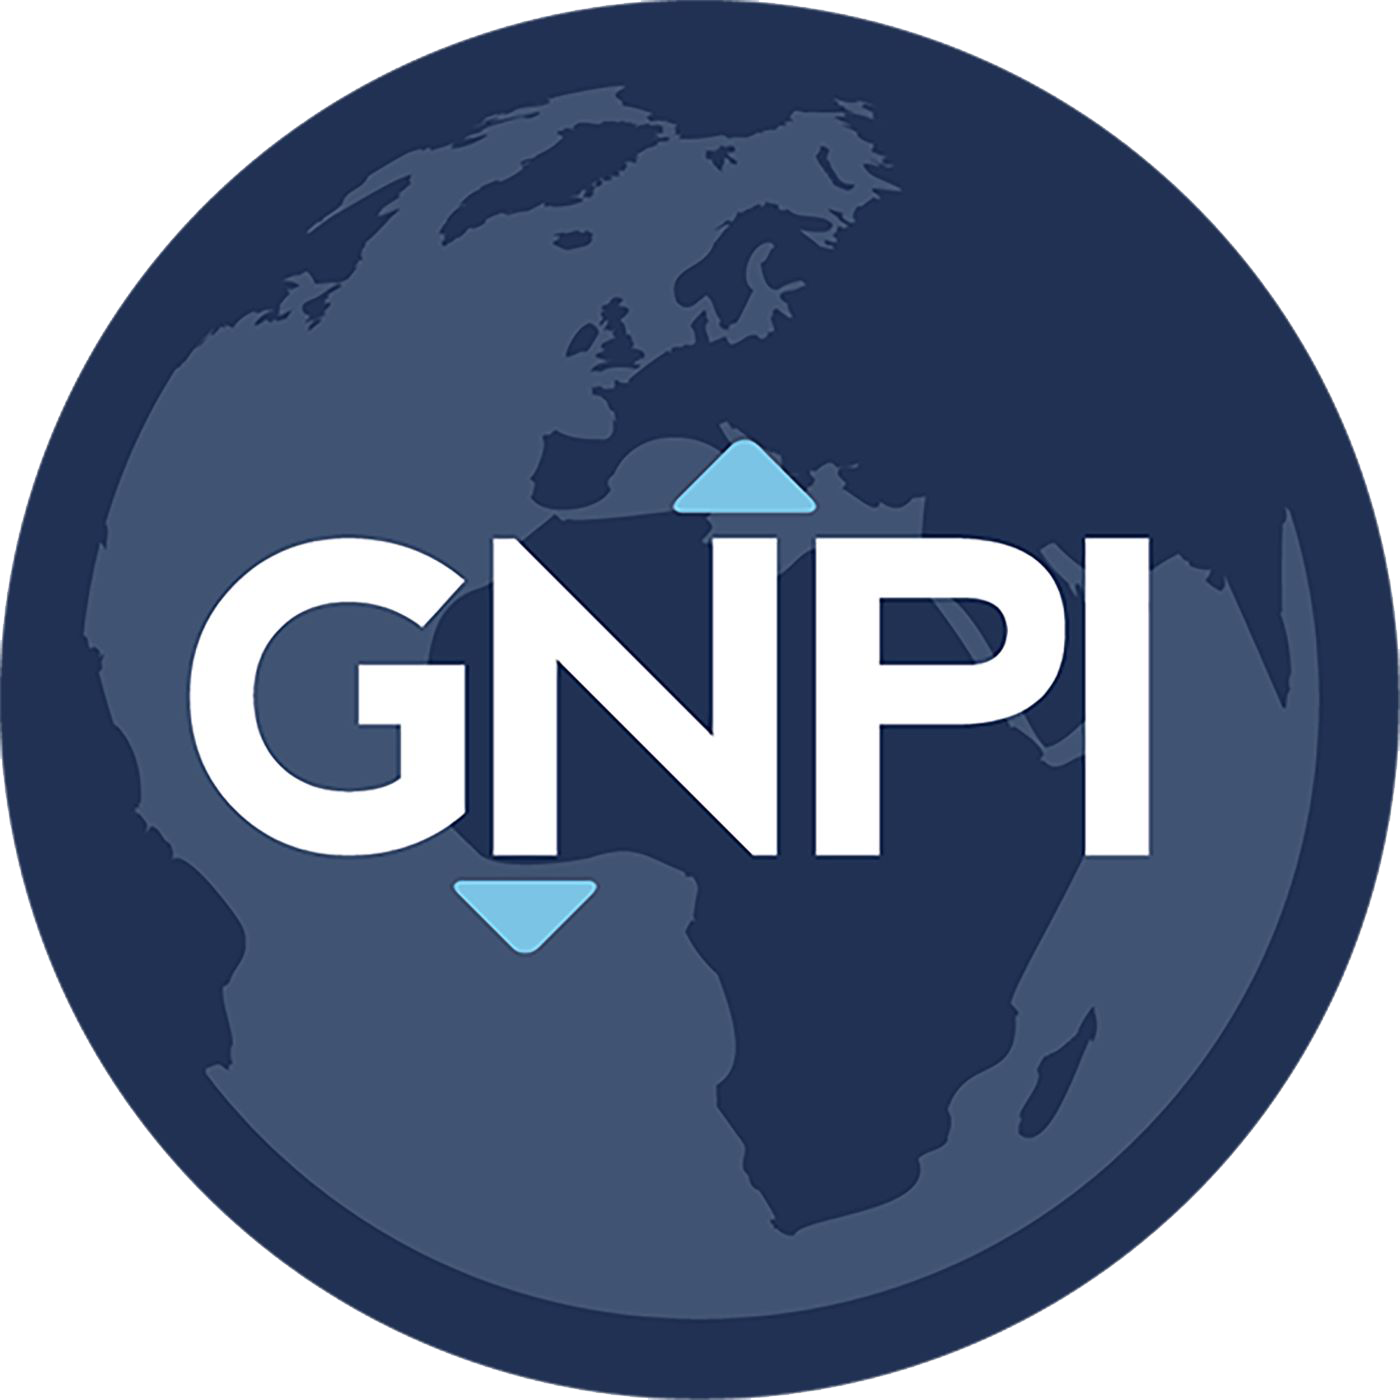 (c) Gnpi.org